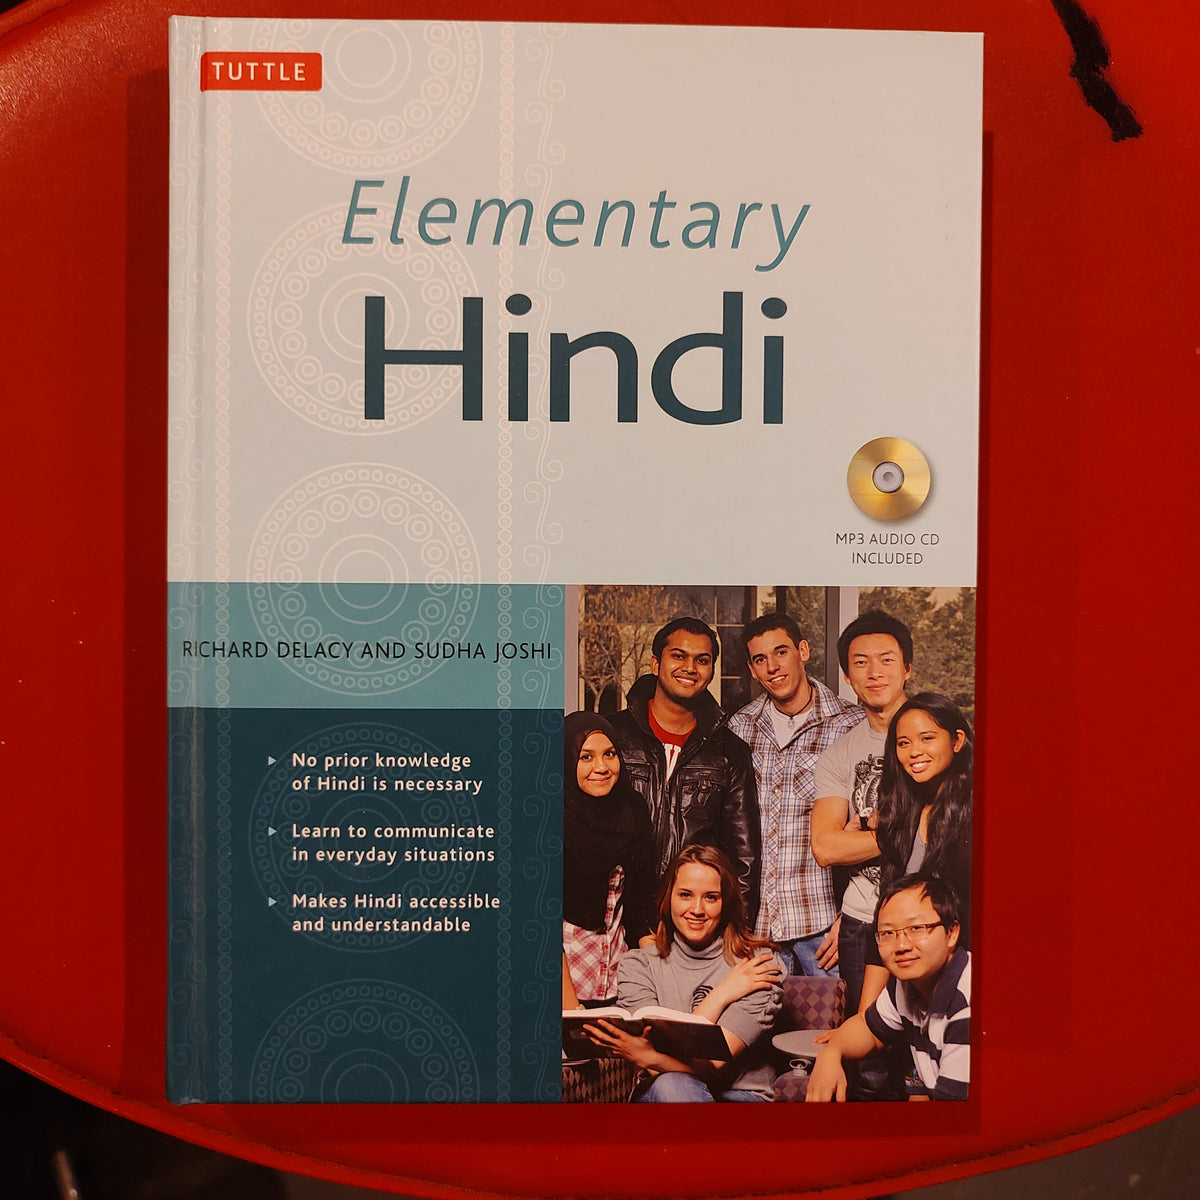 Elementary Hindi book and MP3